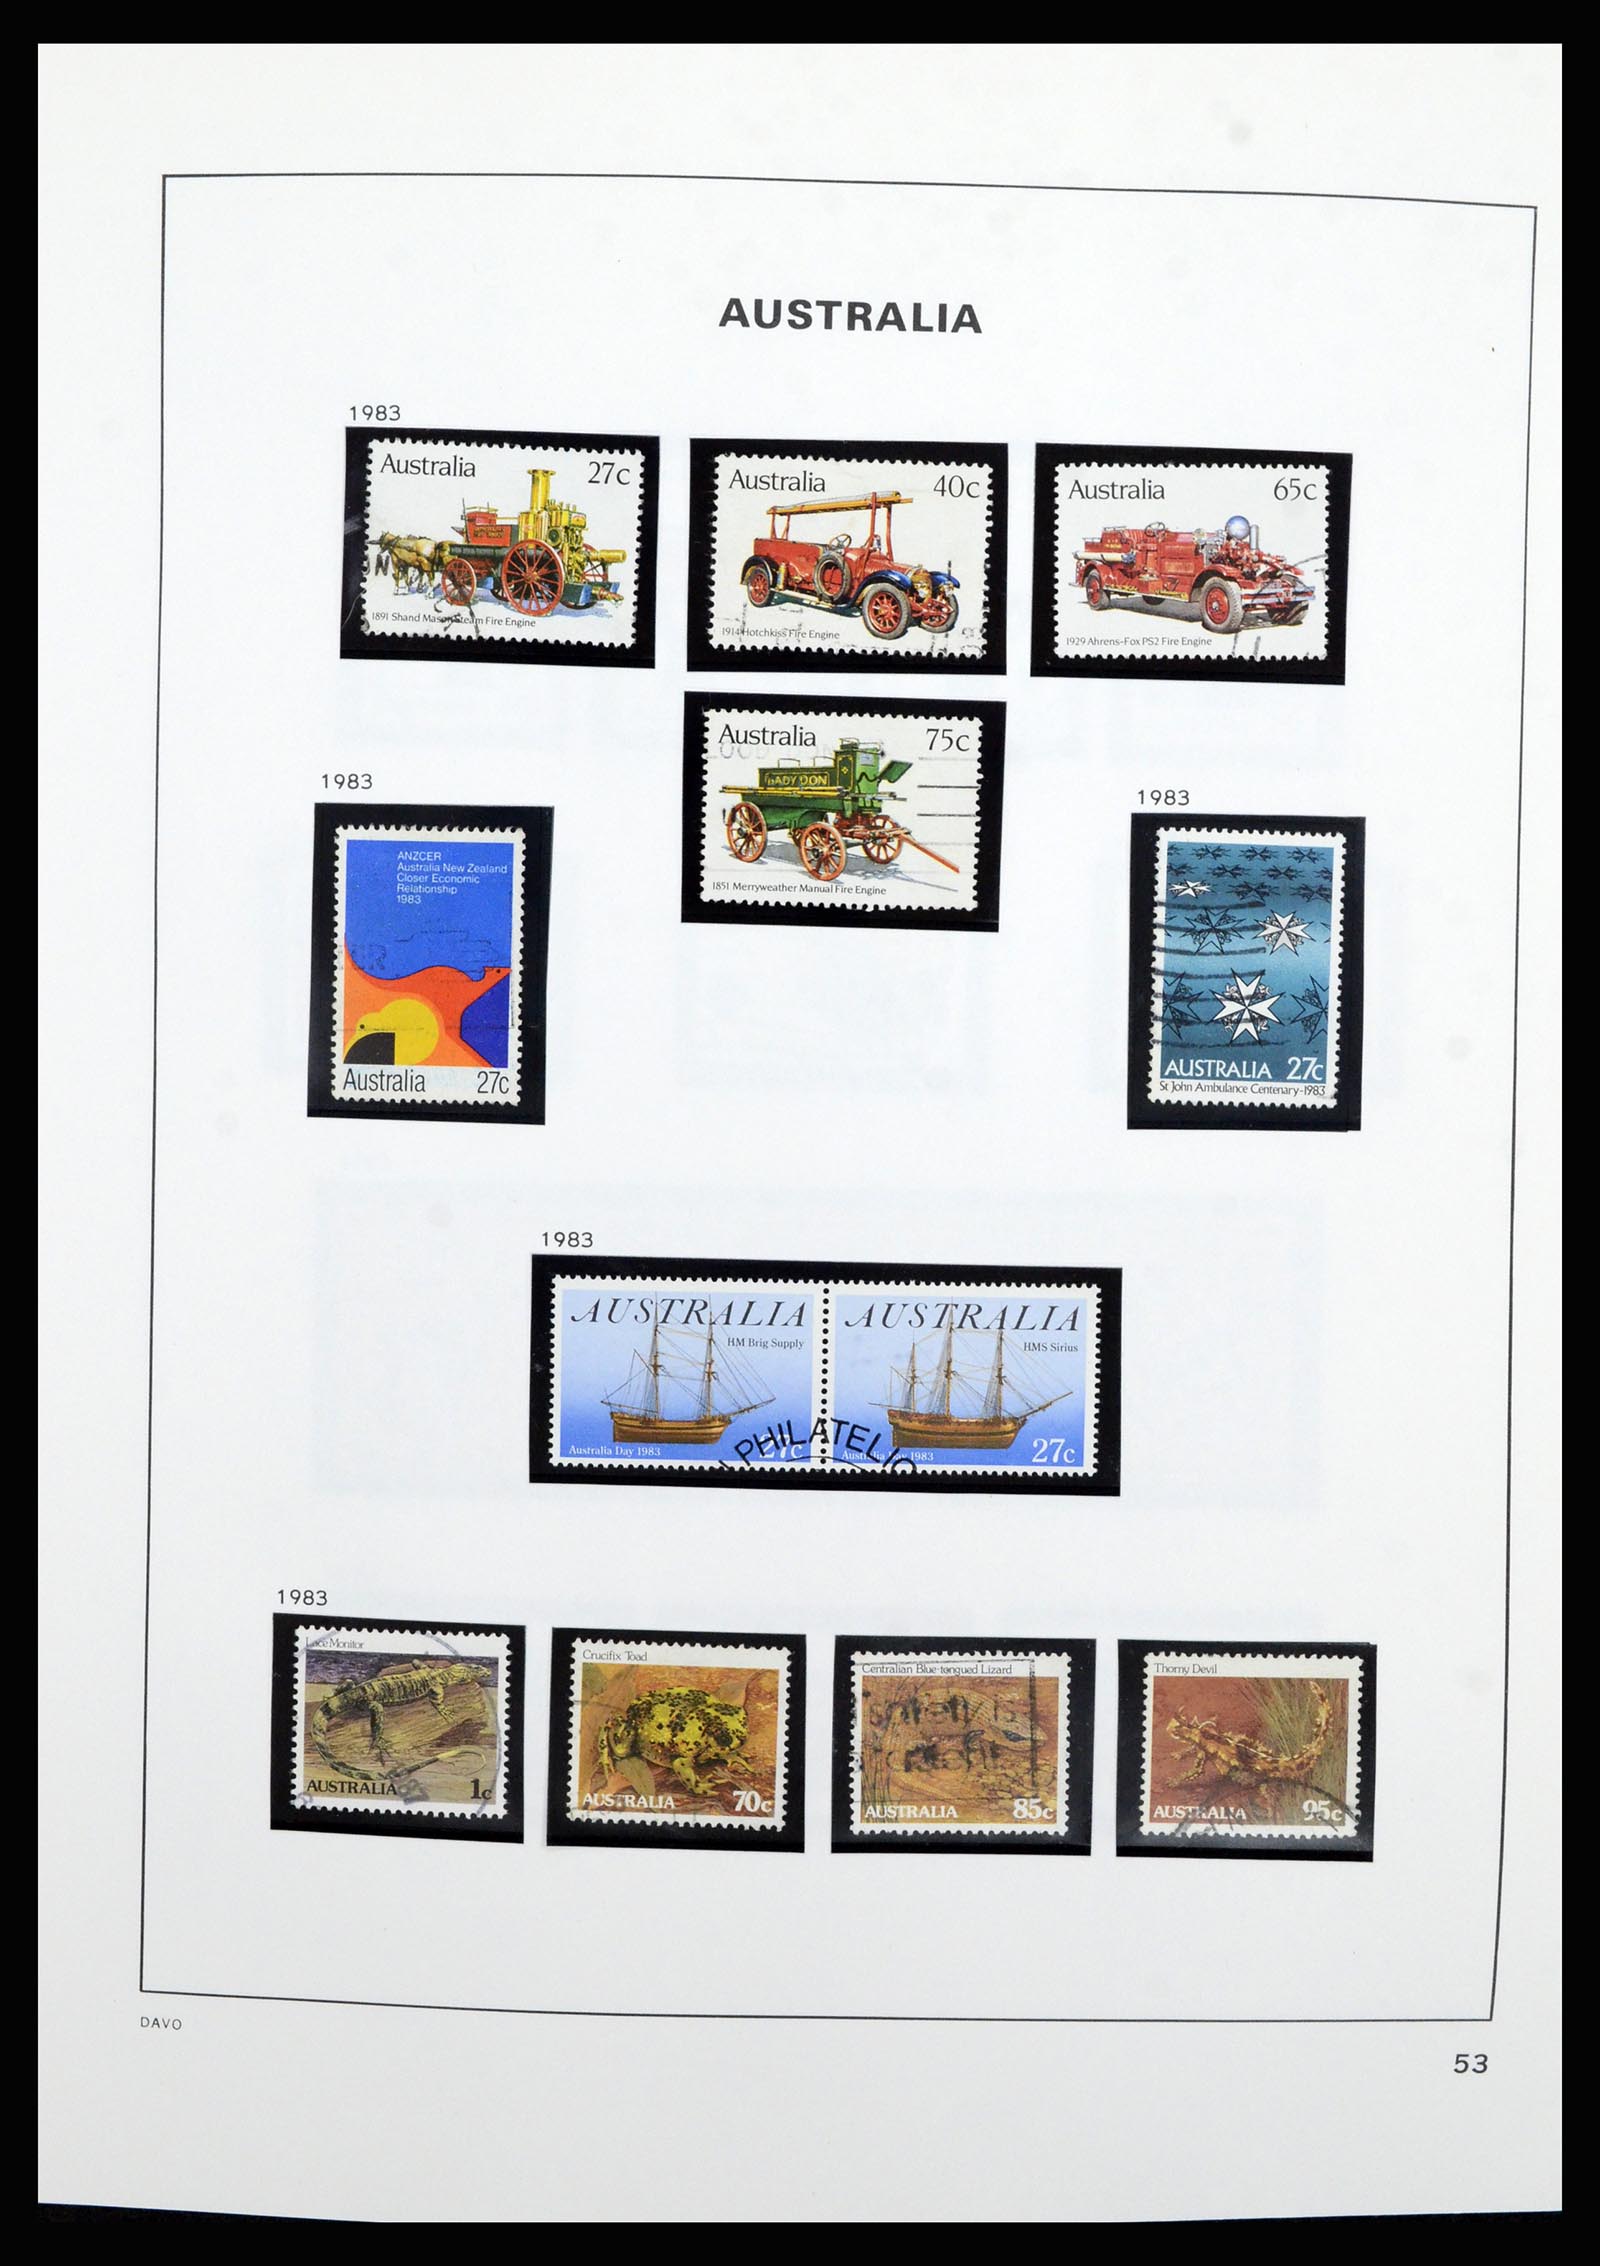 37085 059 - Stamp collection 37085 Australia 1913-2018!